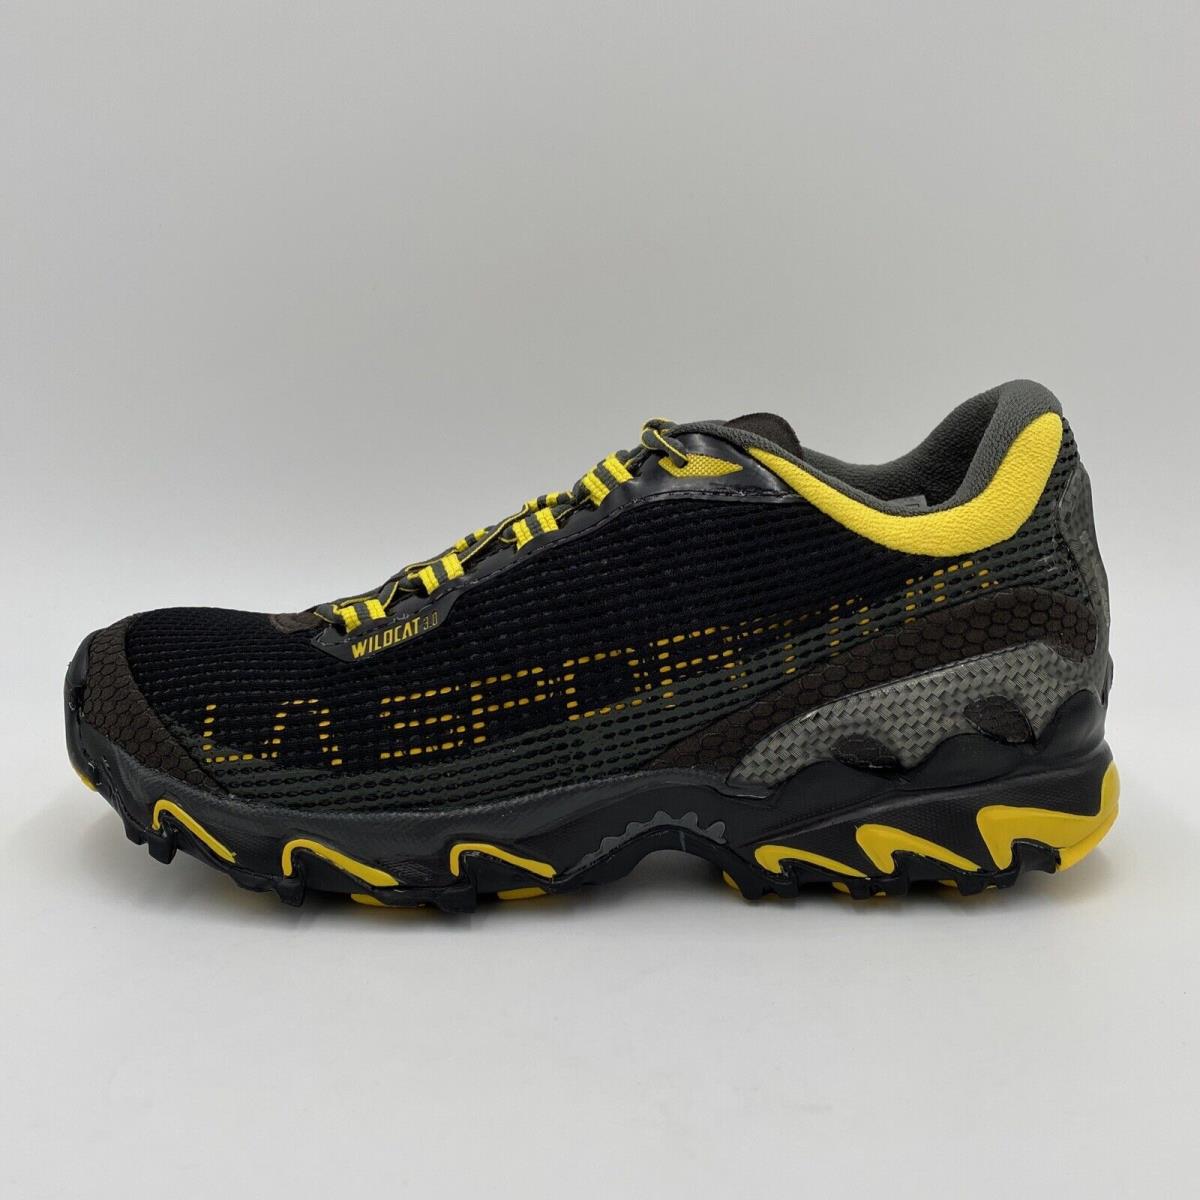 Lasportiva La Sportiva Mens Wildcat 3.0 Mountain Running Shoes 260BY Black/yellow Sz 10.5+